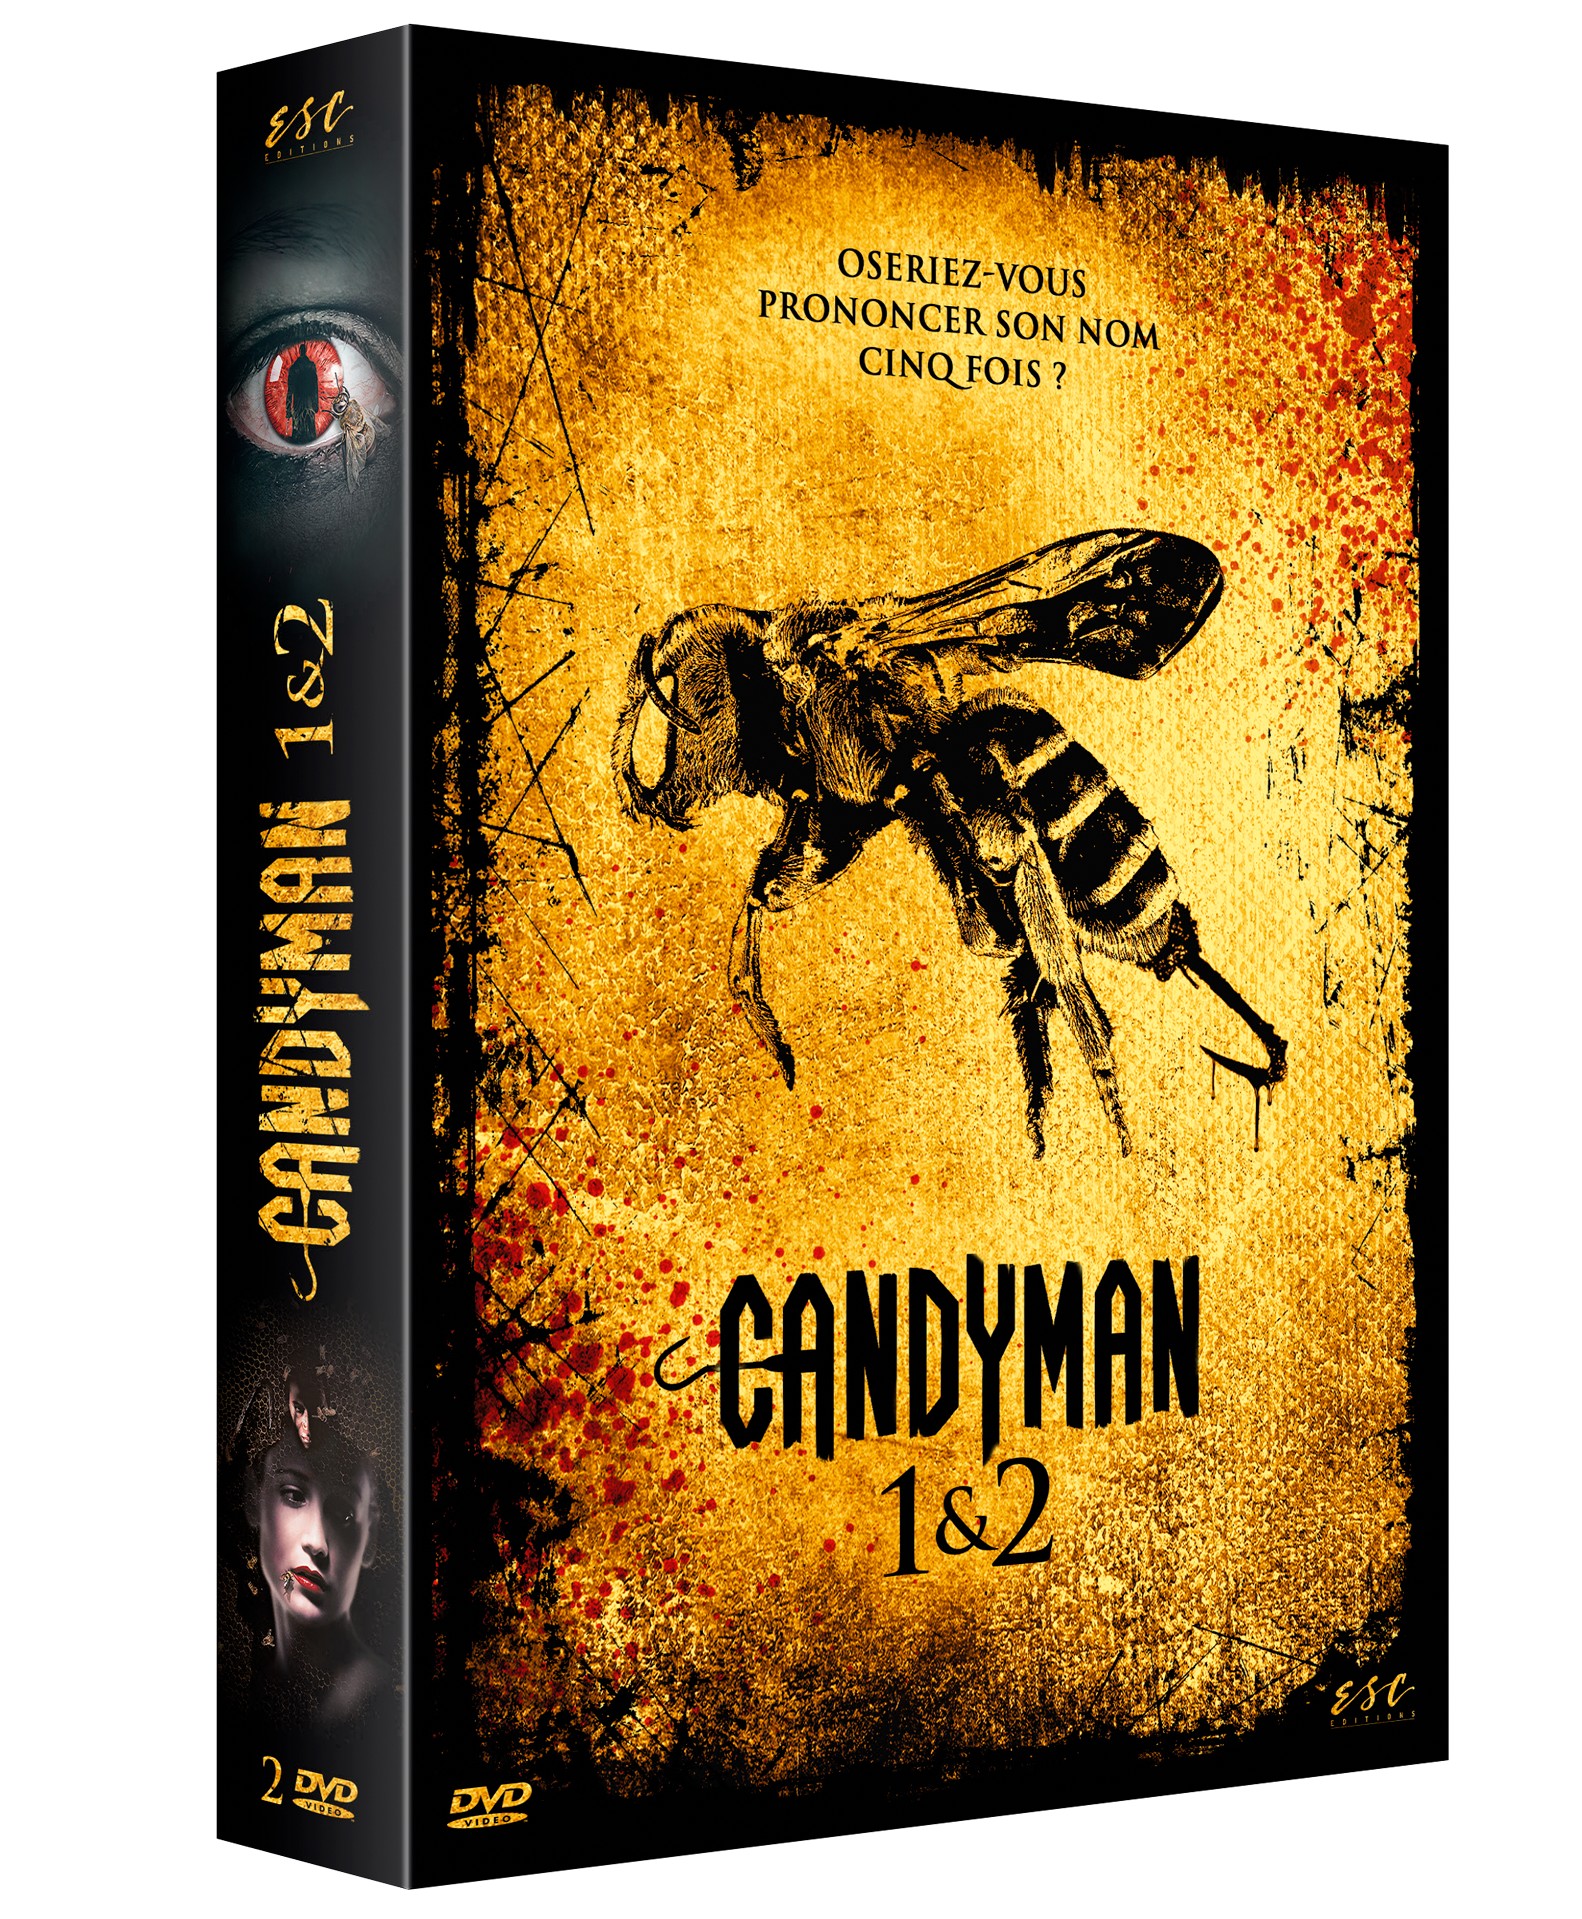 CANDYMAN 1 & 2 - COFFRET DVD - ESC Editions & Distribution